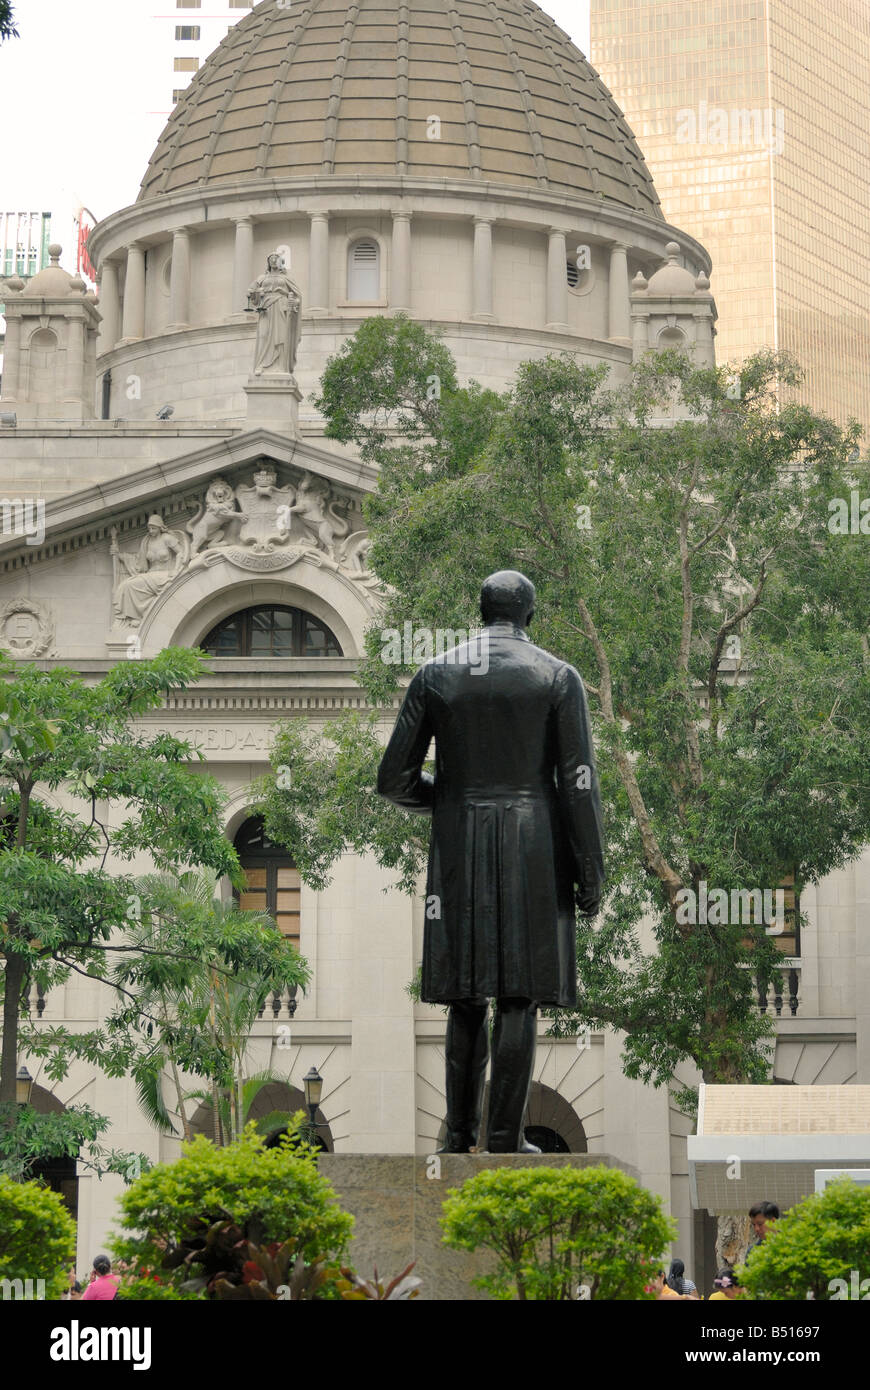 Statue Square with Legislative Council Building, Hong Kong, Statue of Sir Thomas Jackson, HSBC Stock Photo